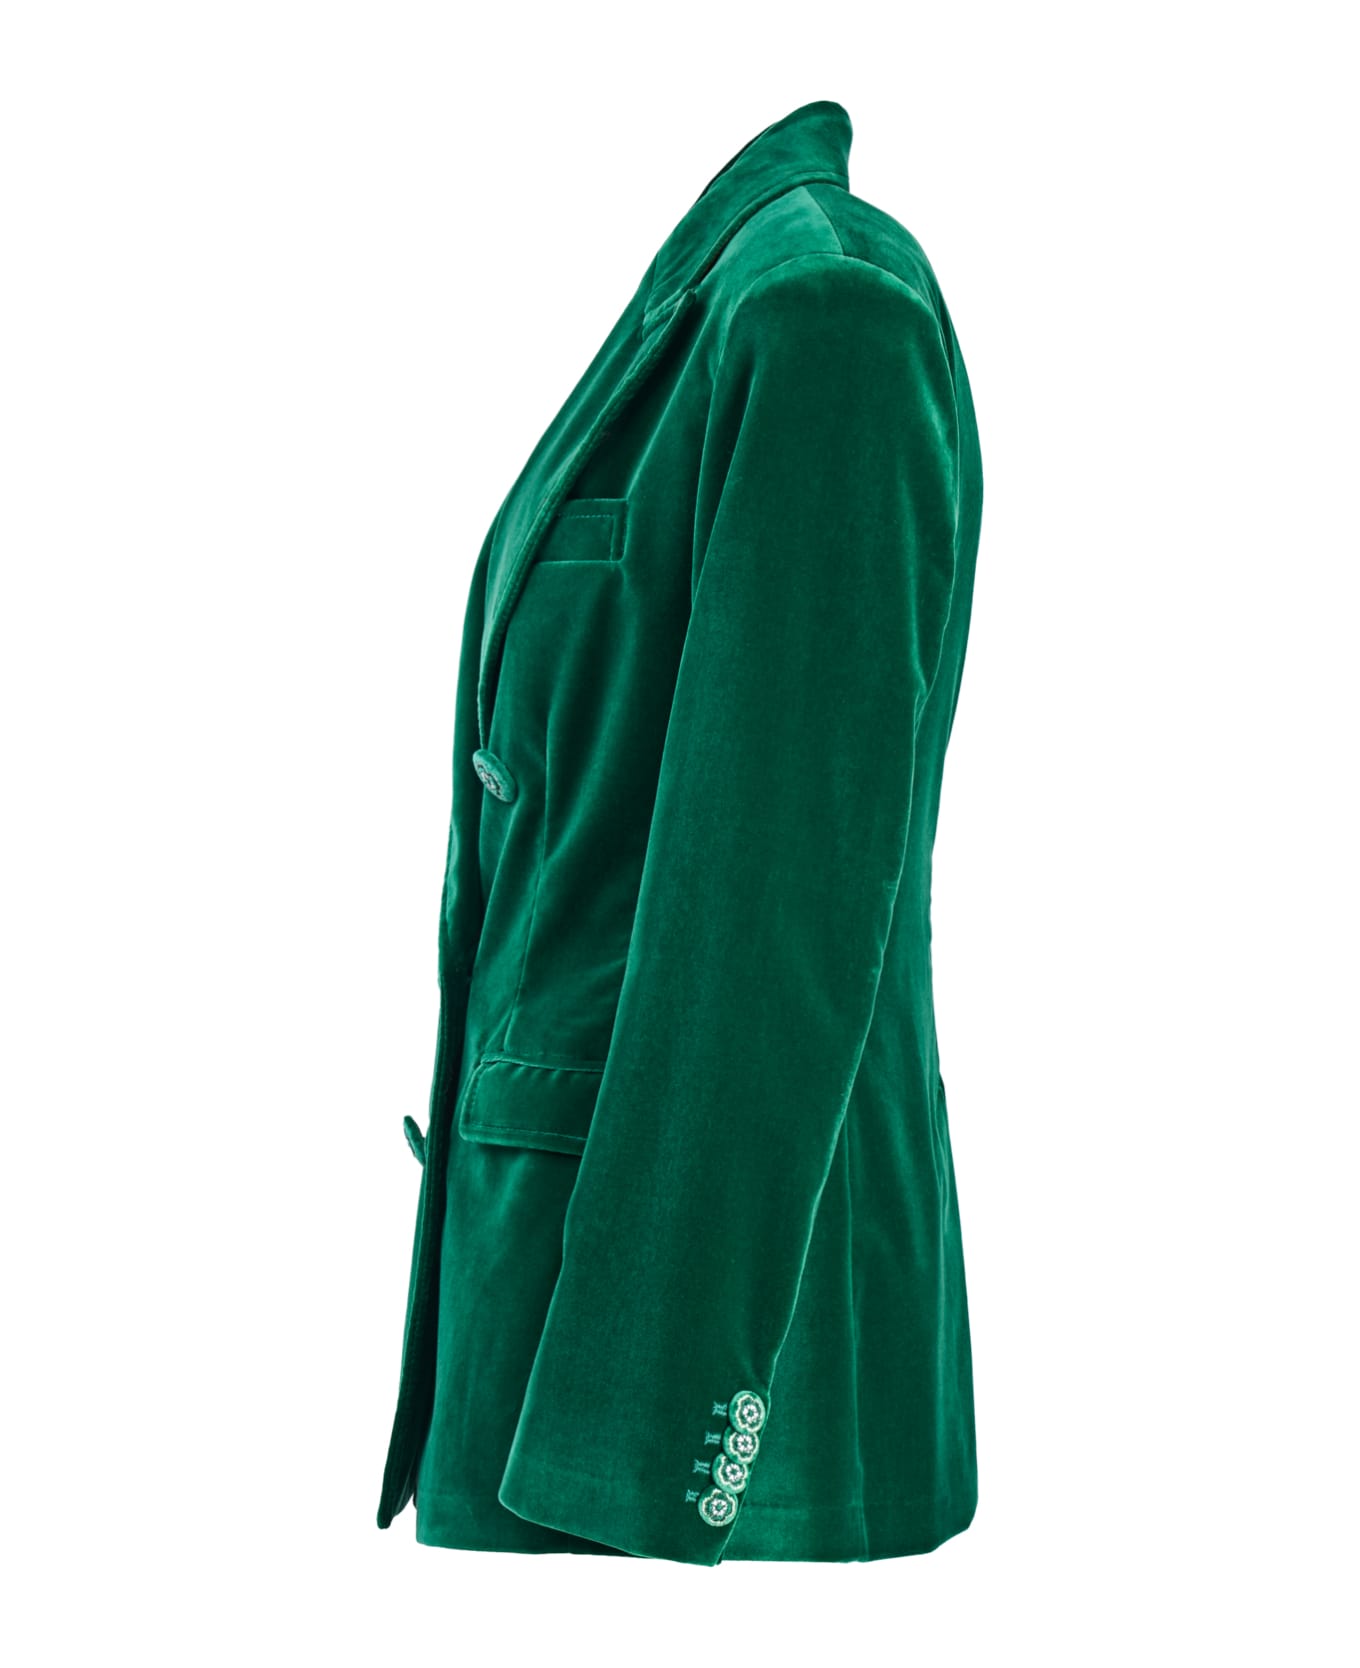 Etro Jackets Green - Green